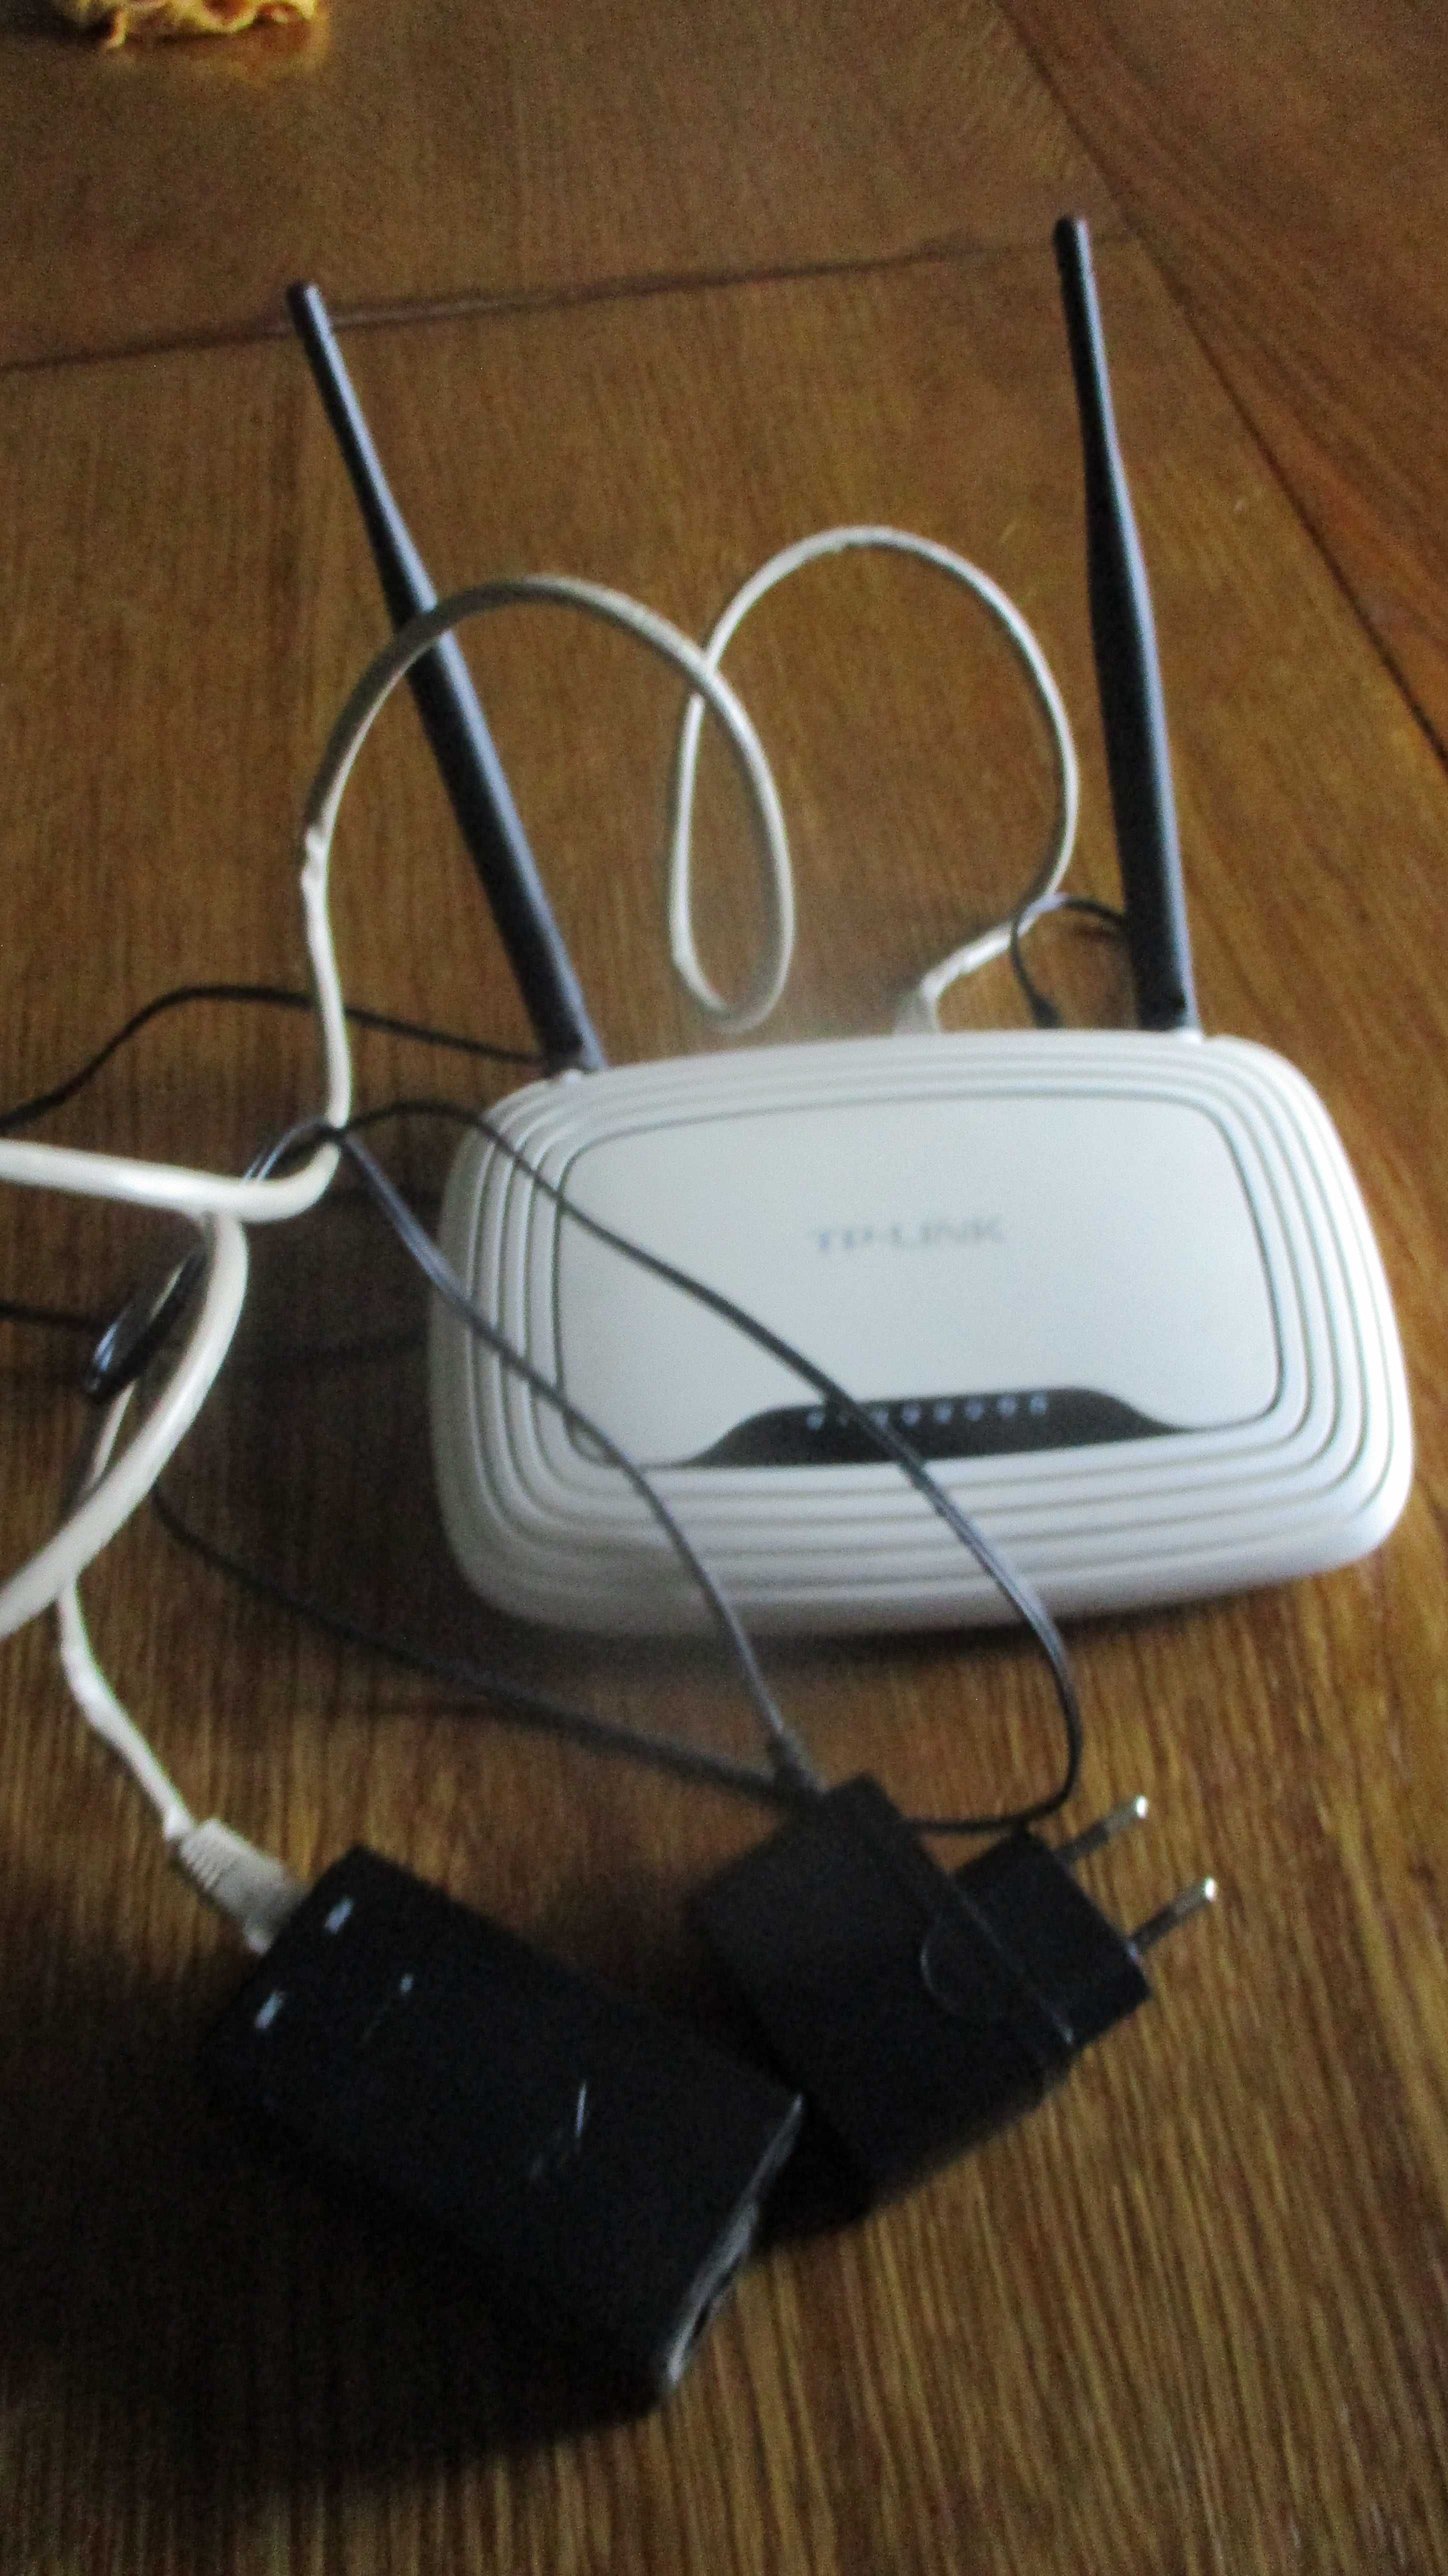 router tp -link ,bezprzewodowy